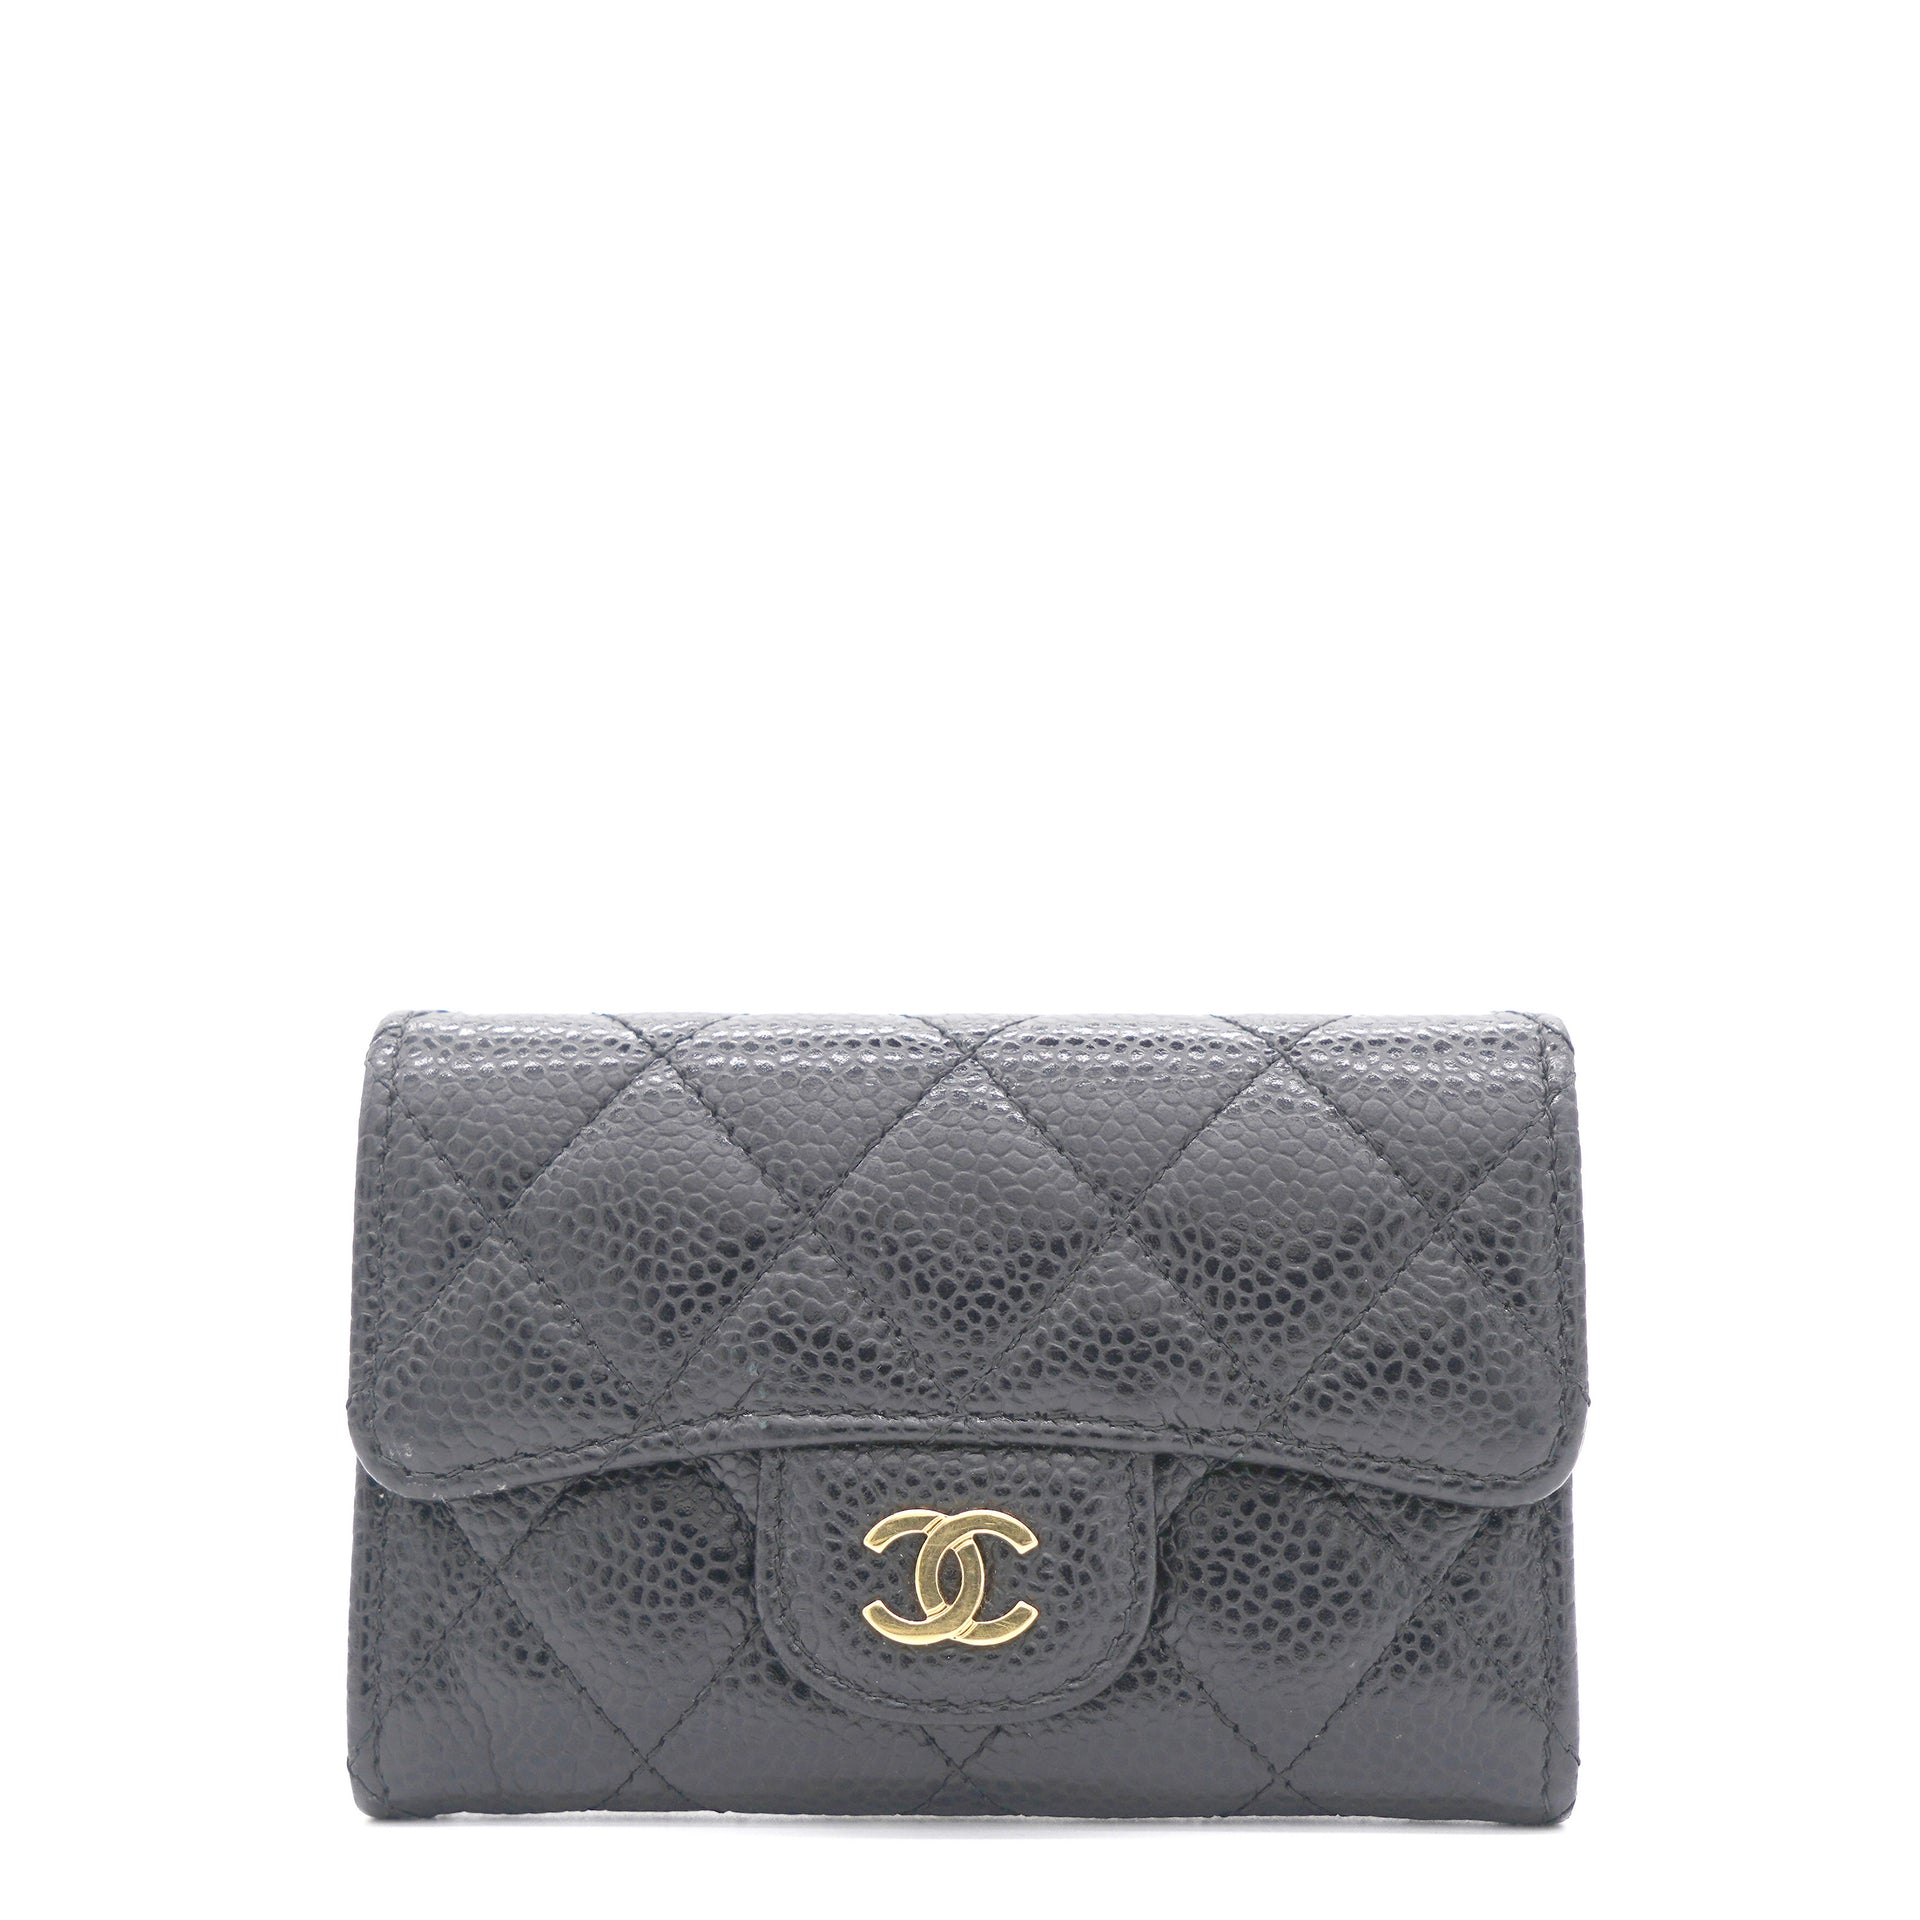 Chanel TriFold Black Caviar Compact Wallet  THE PURSE AFFAIR